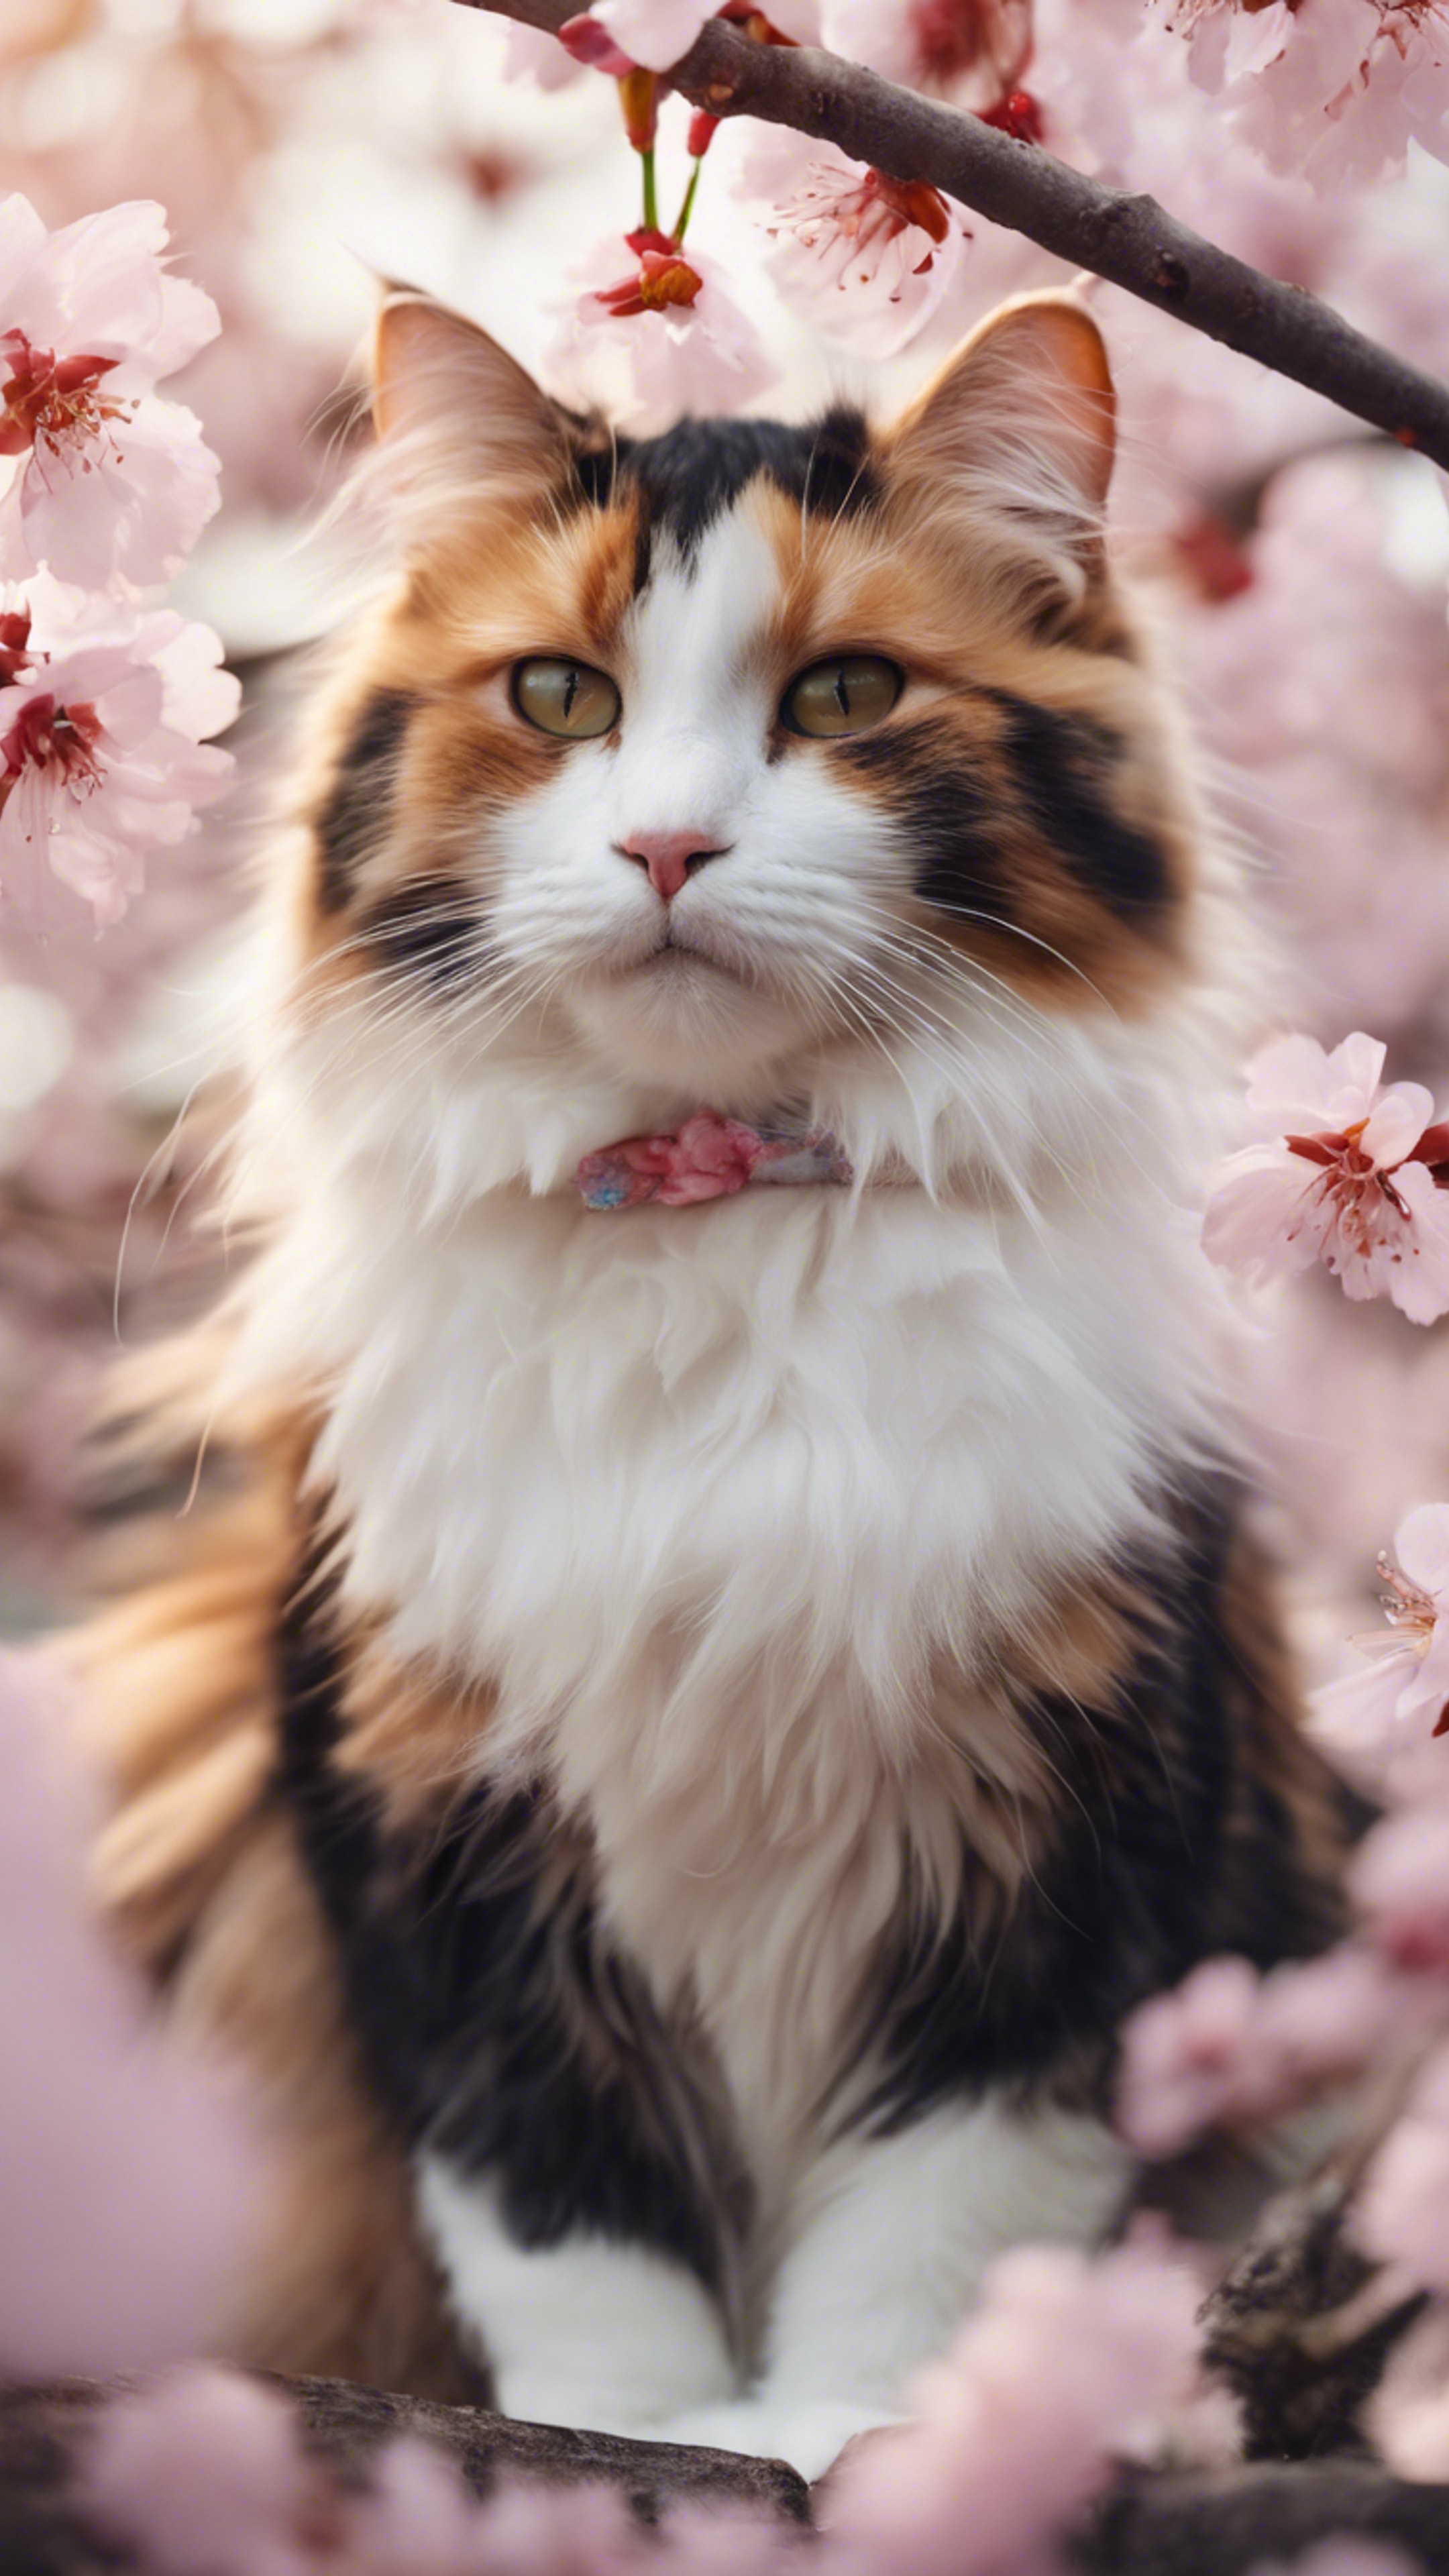 A fluffy calico cat in a cute pose sitting amongst cherry blossoms. کاغذ دیواری[3cf3847c7c9c4f38aba7]